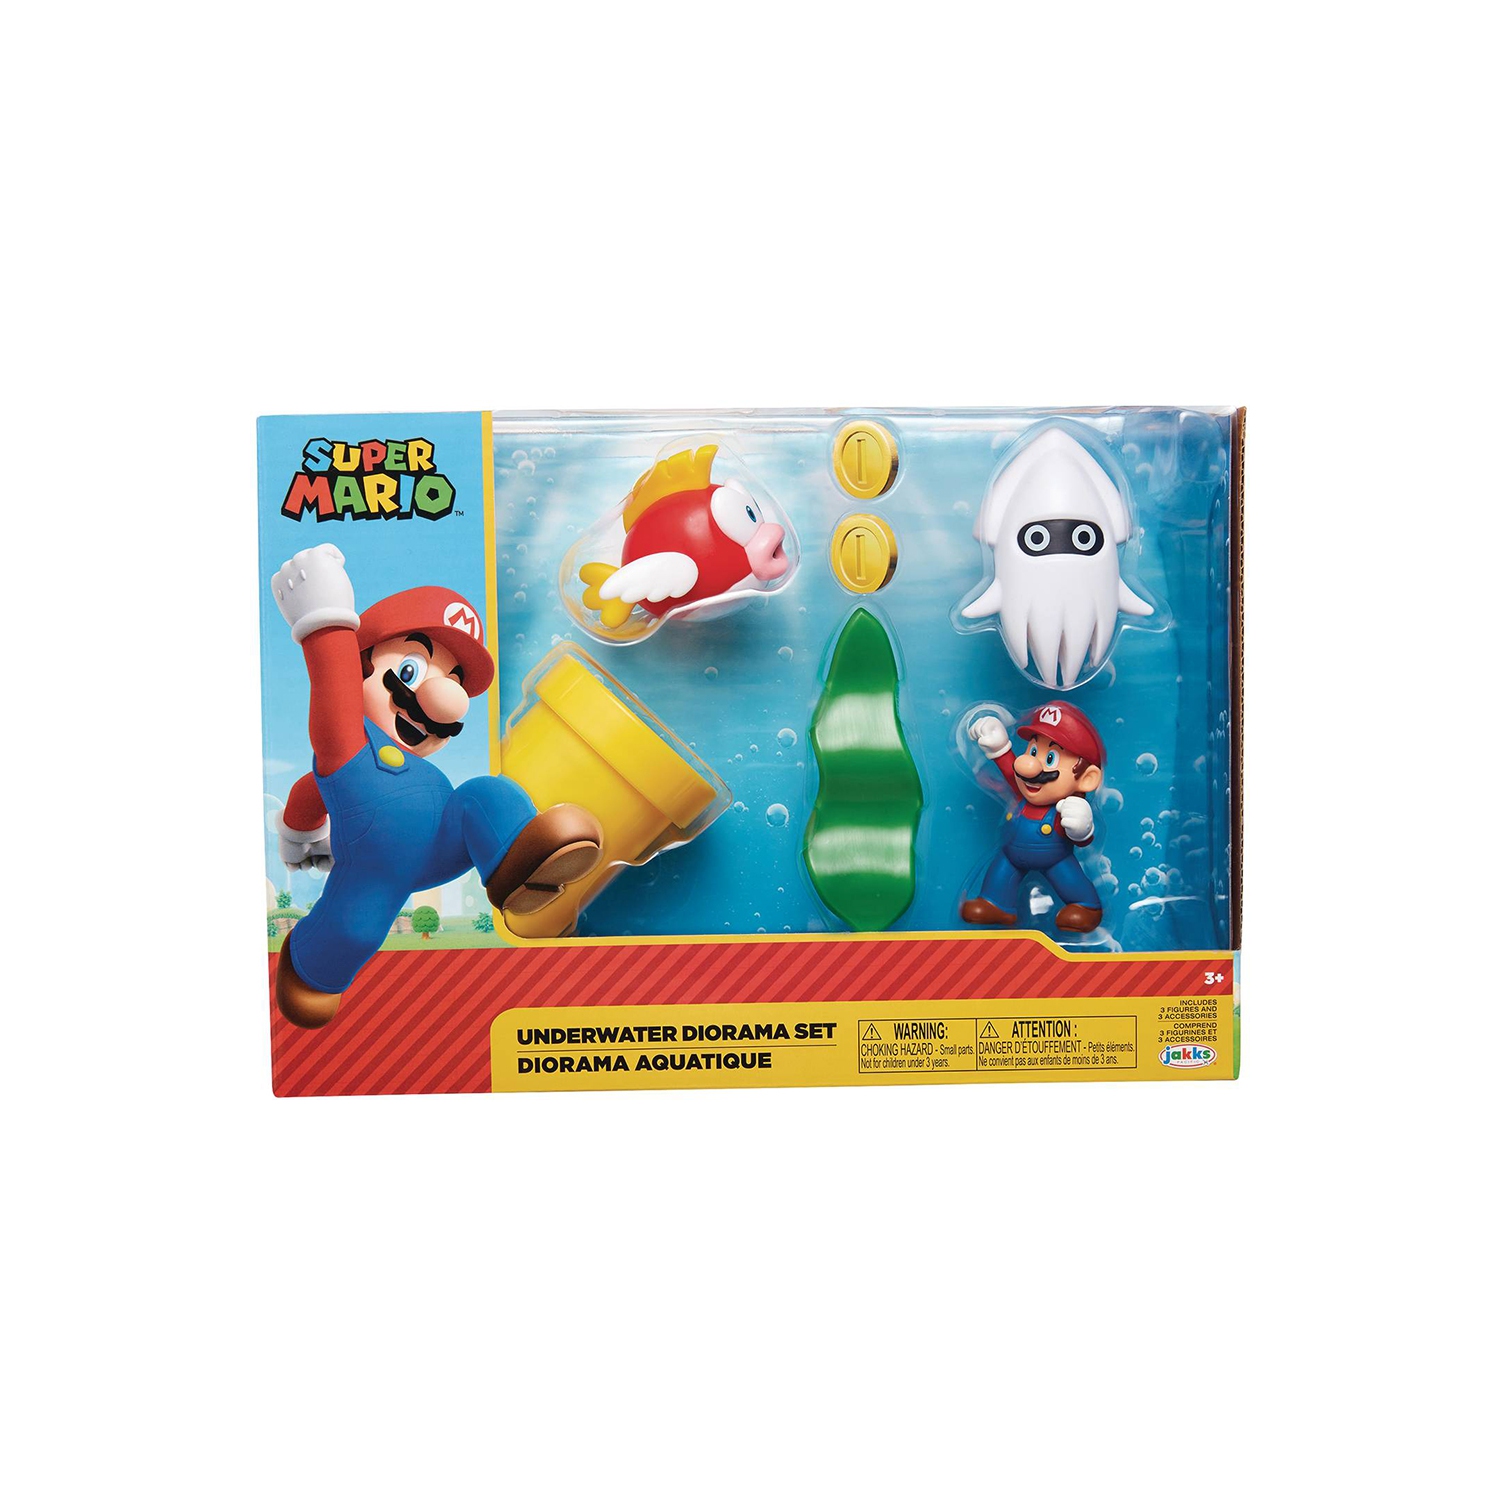 Super Mario 2.5 Inch Action Figure World Of Nintendo - Underwater Diorama Set